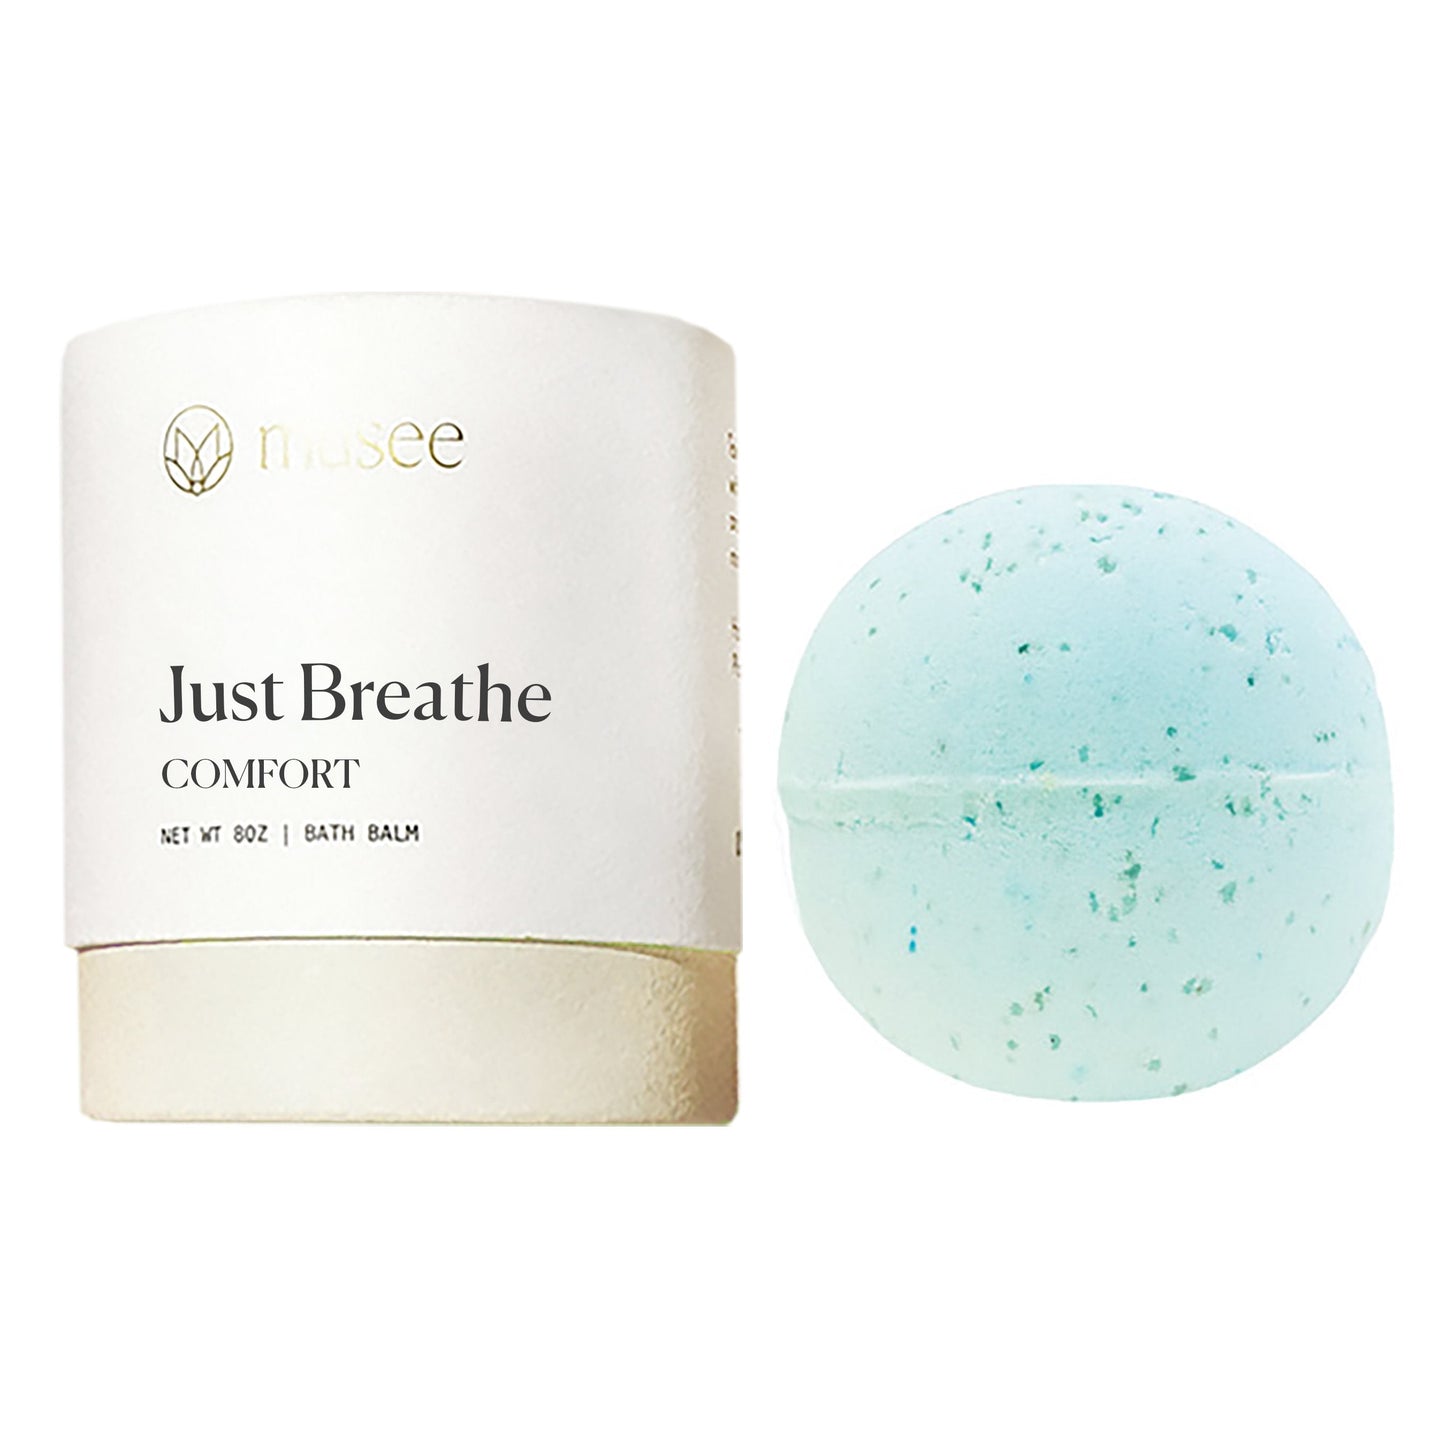 Therapy Bath Balm: Just Breathe